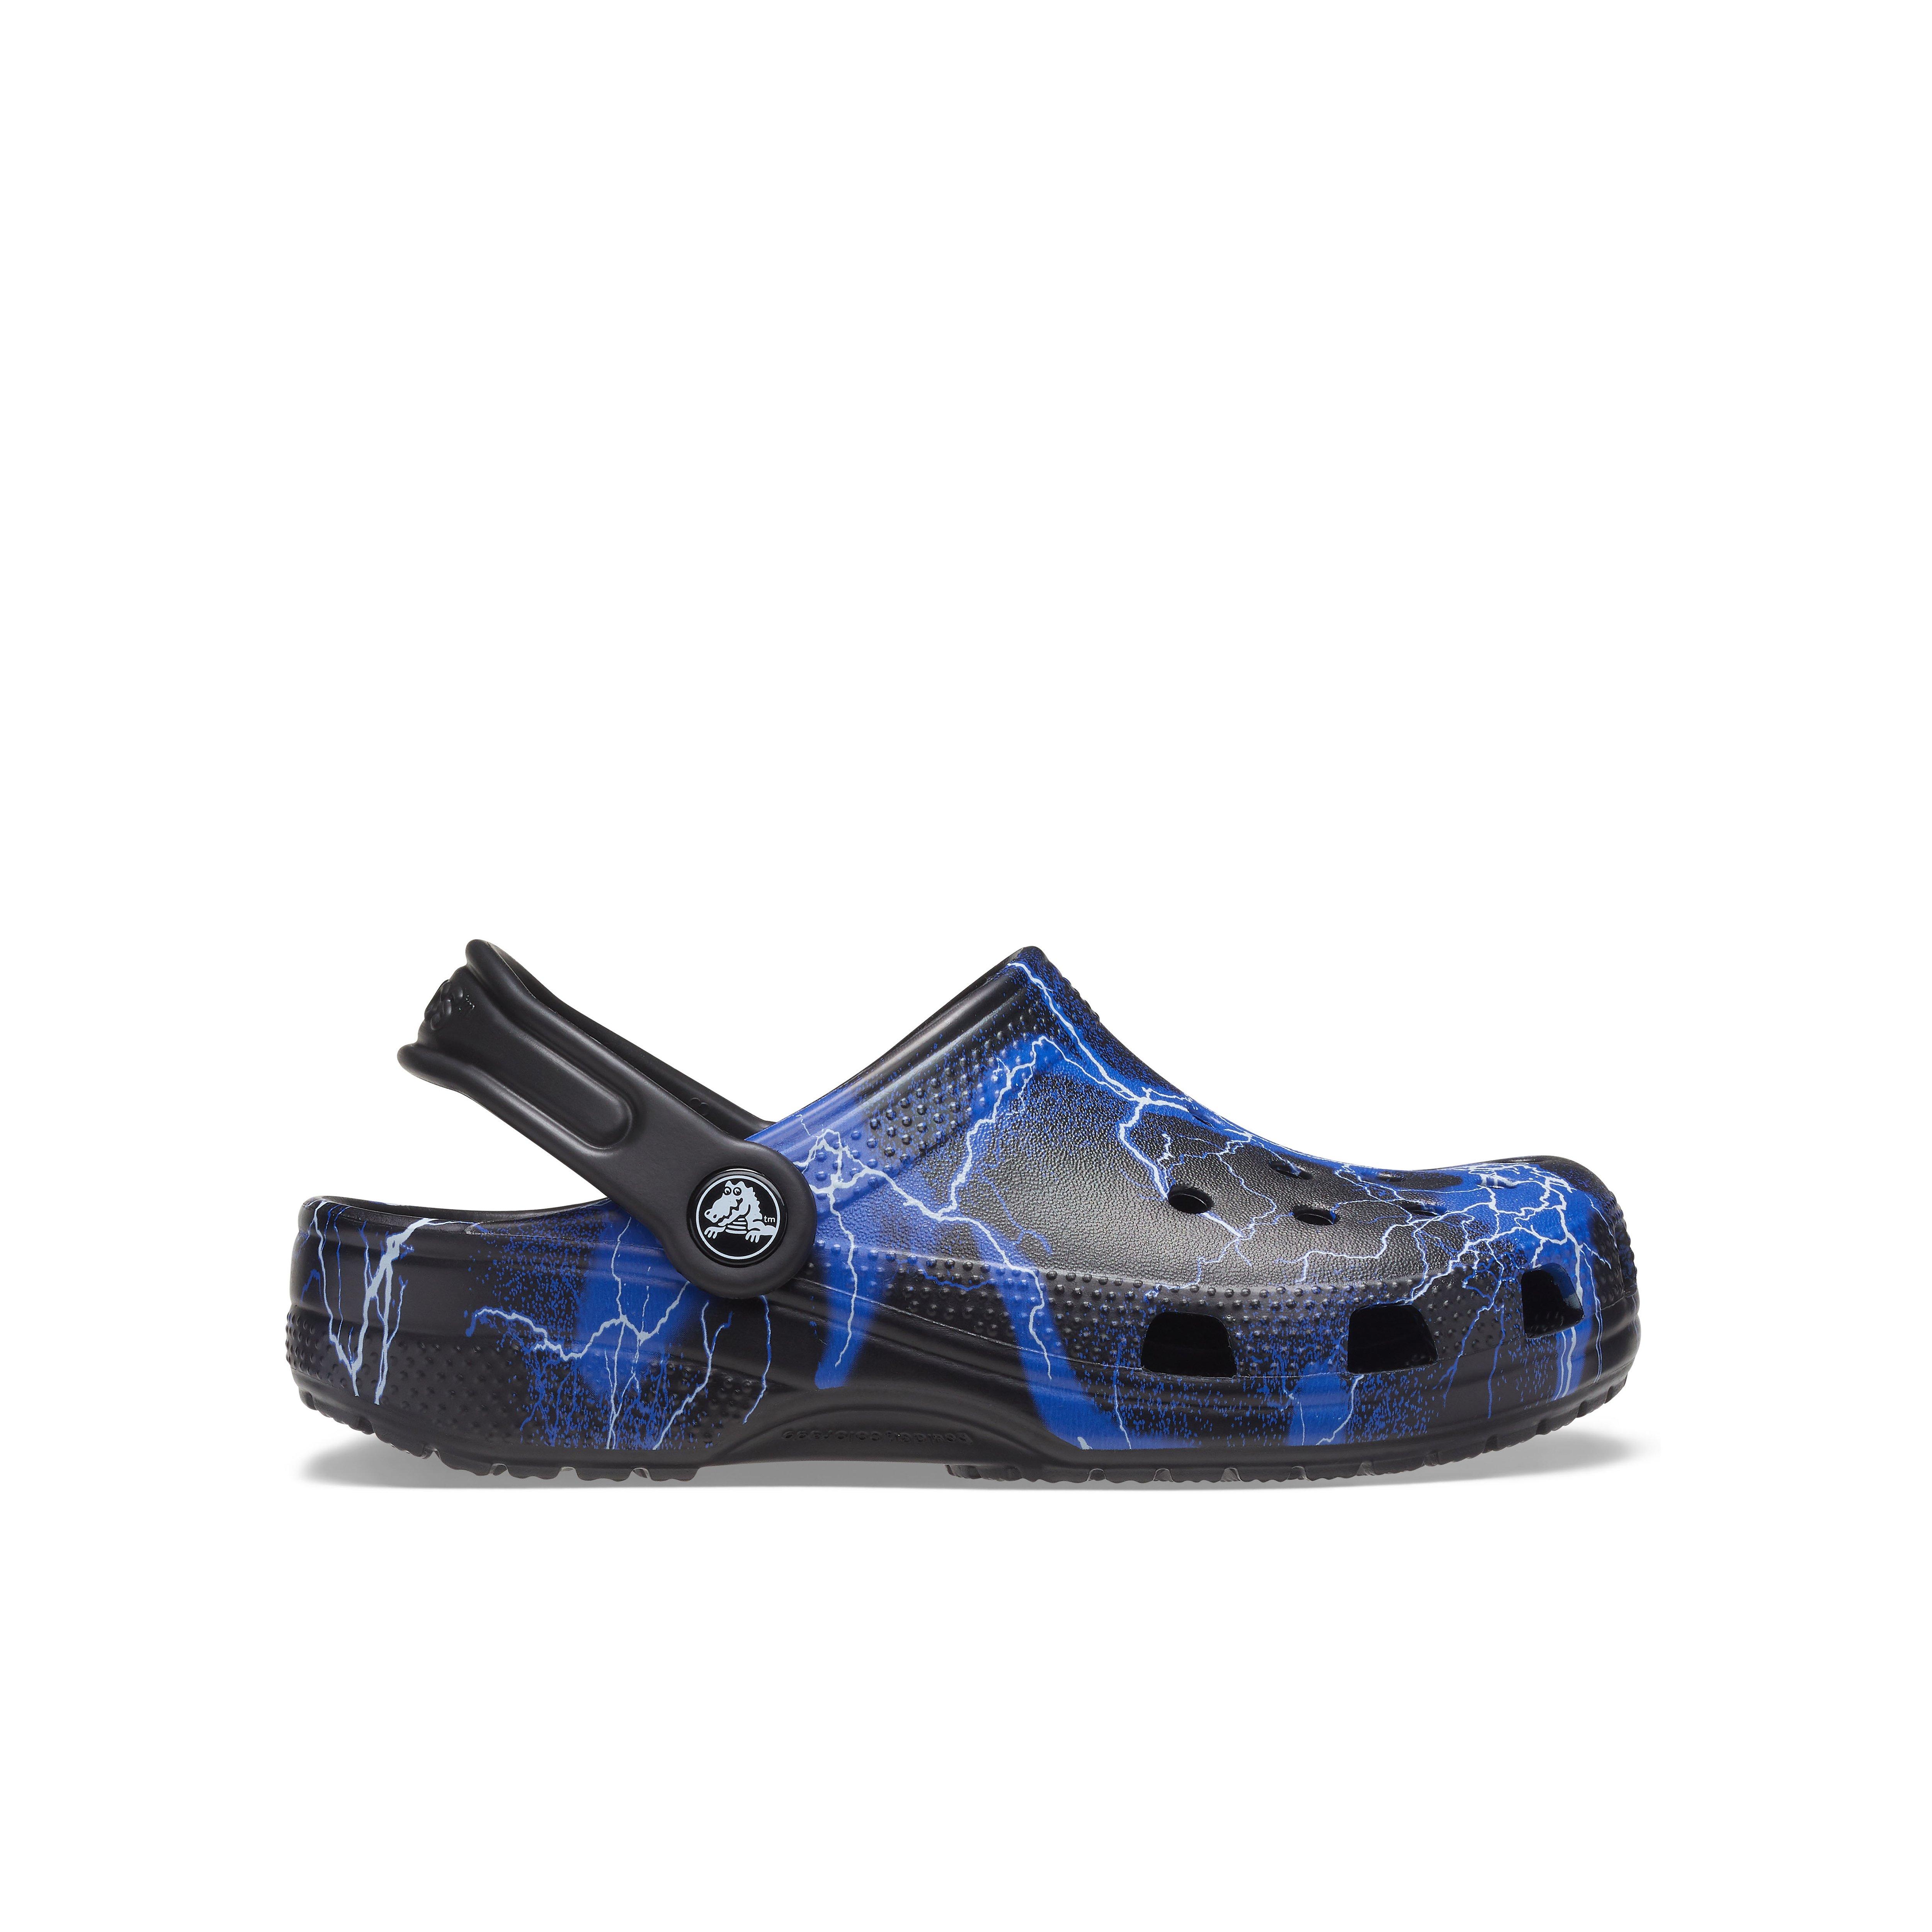 blue and black crocs